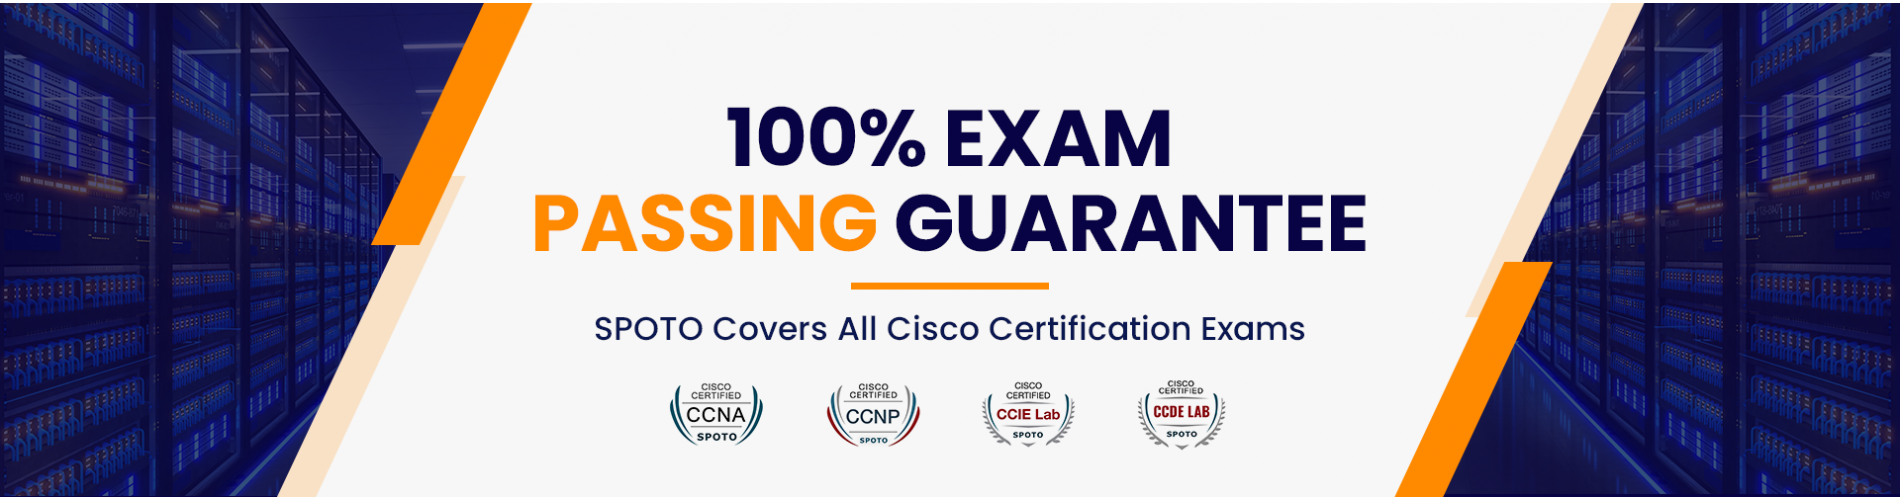 Cisco exam passing guarantee